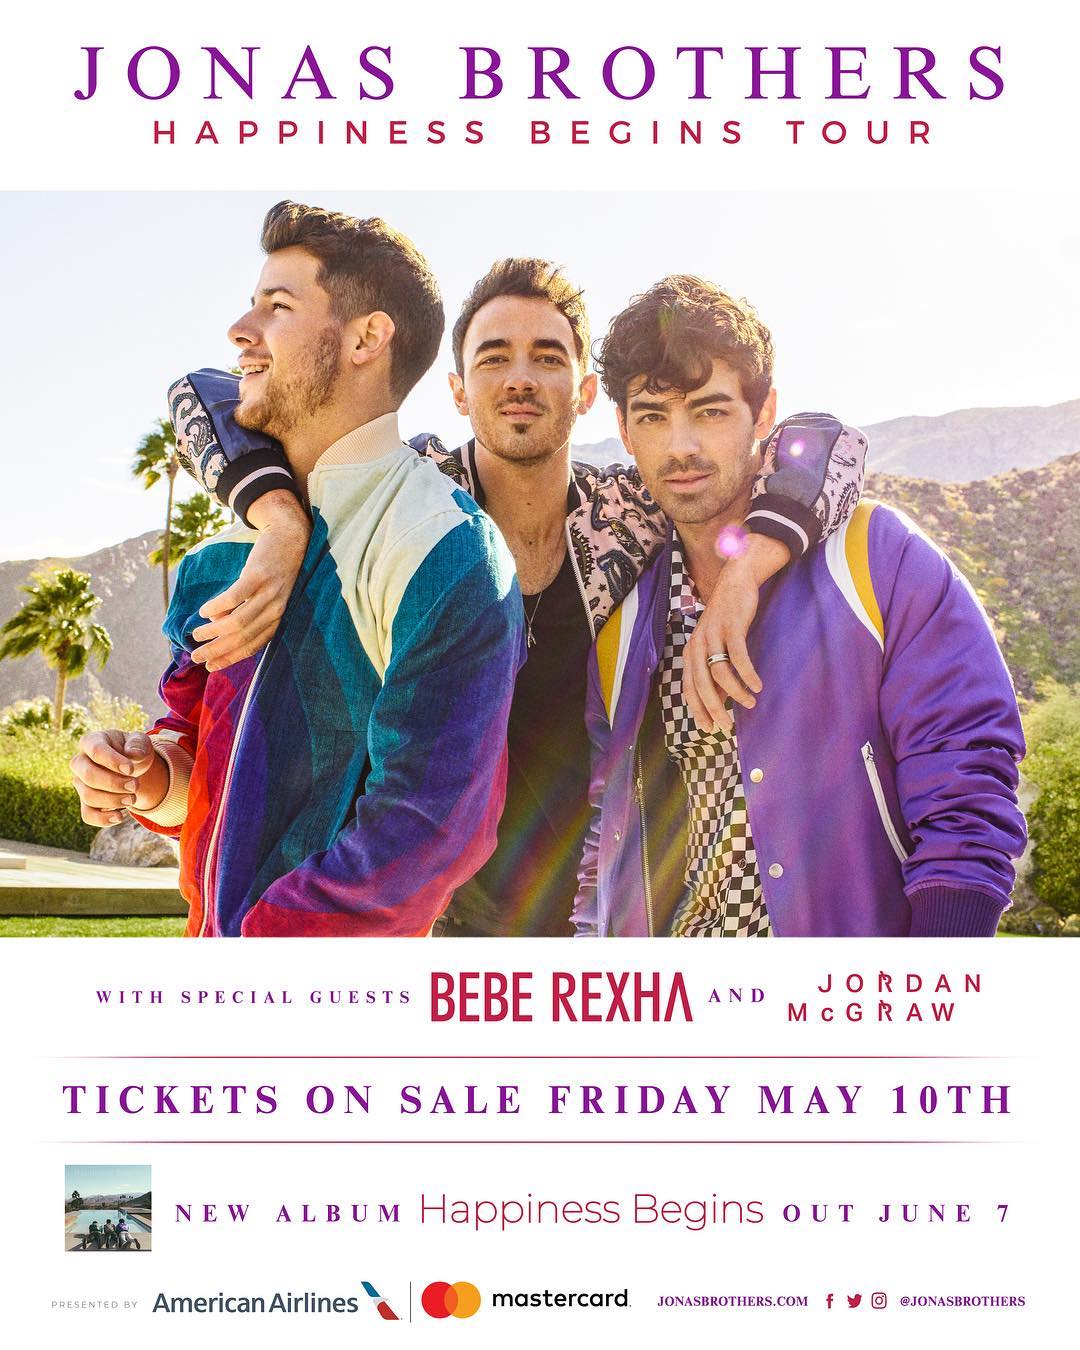 Jonas Brothers tour poster